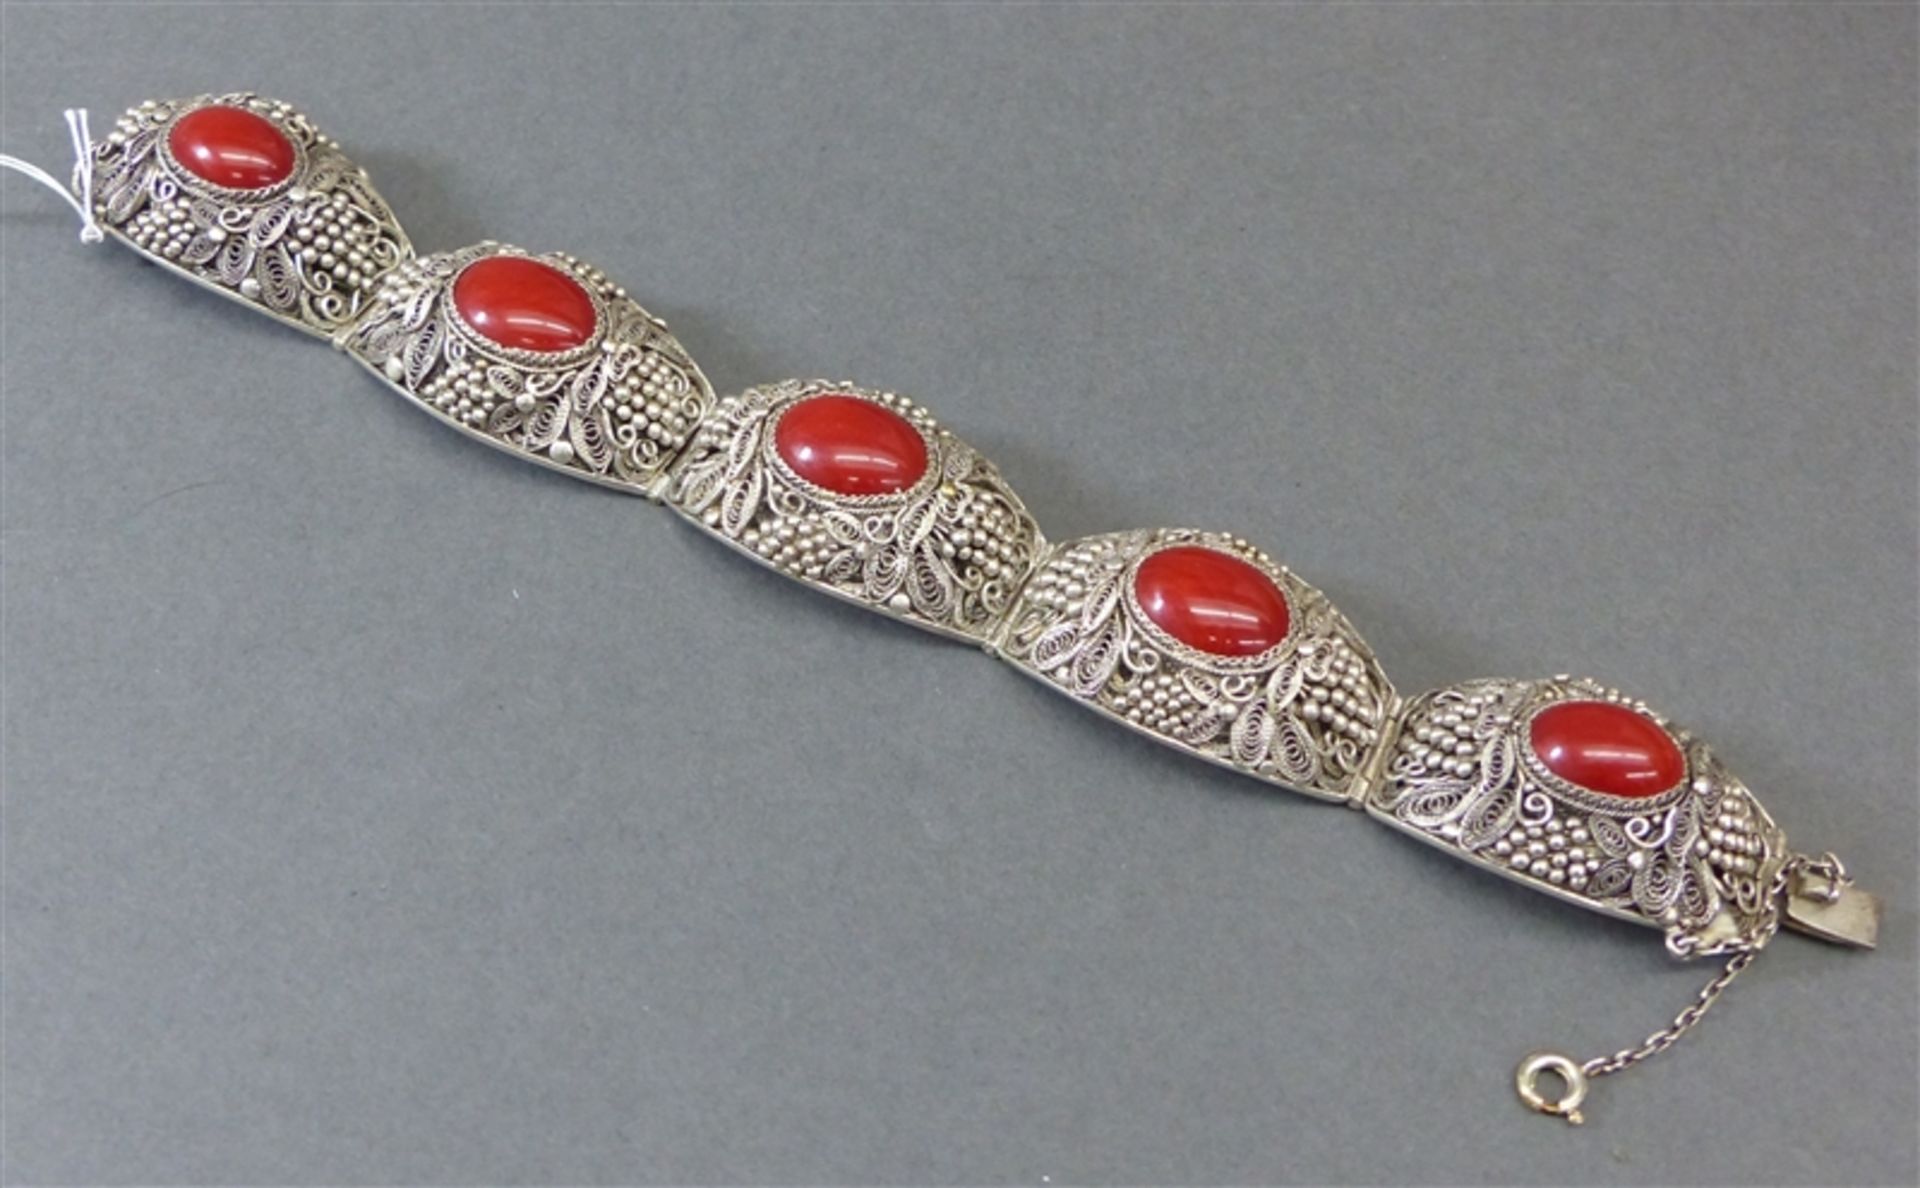 Armband Silber, Filigranarbeit, China, 5 Karneolcabochons, Kastenschloss, ca. 53 g schwer, l 18 cm,